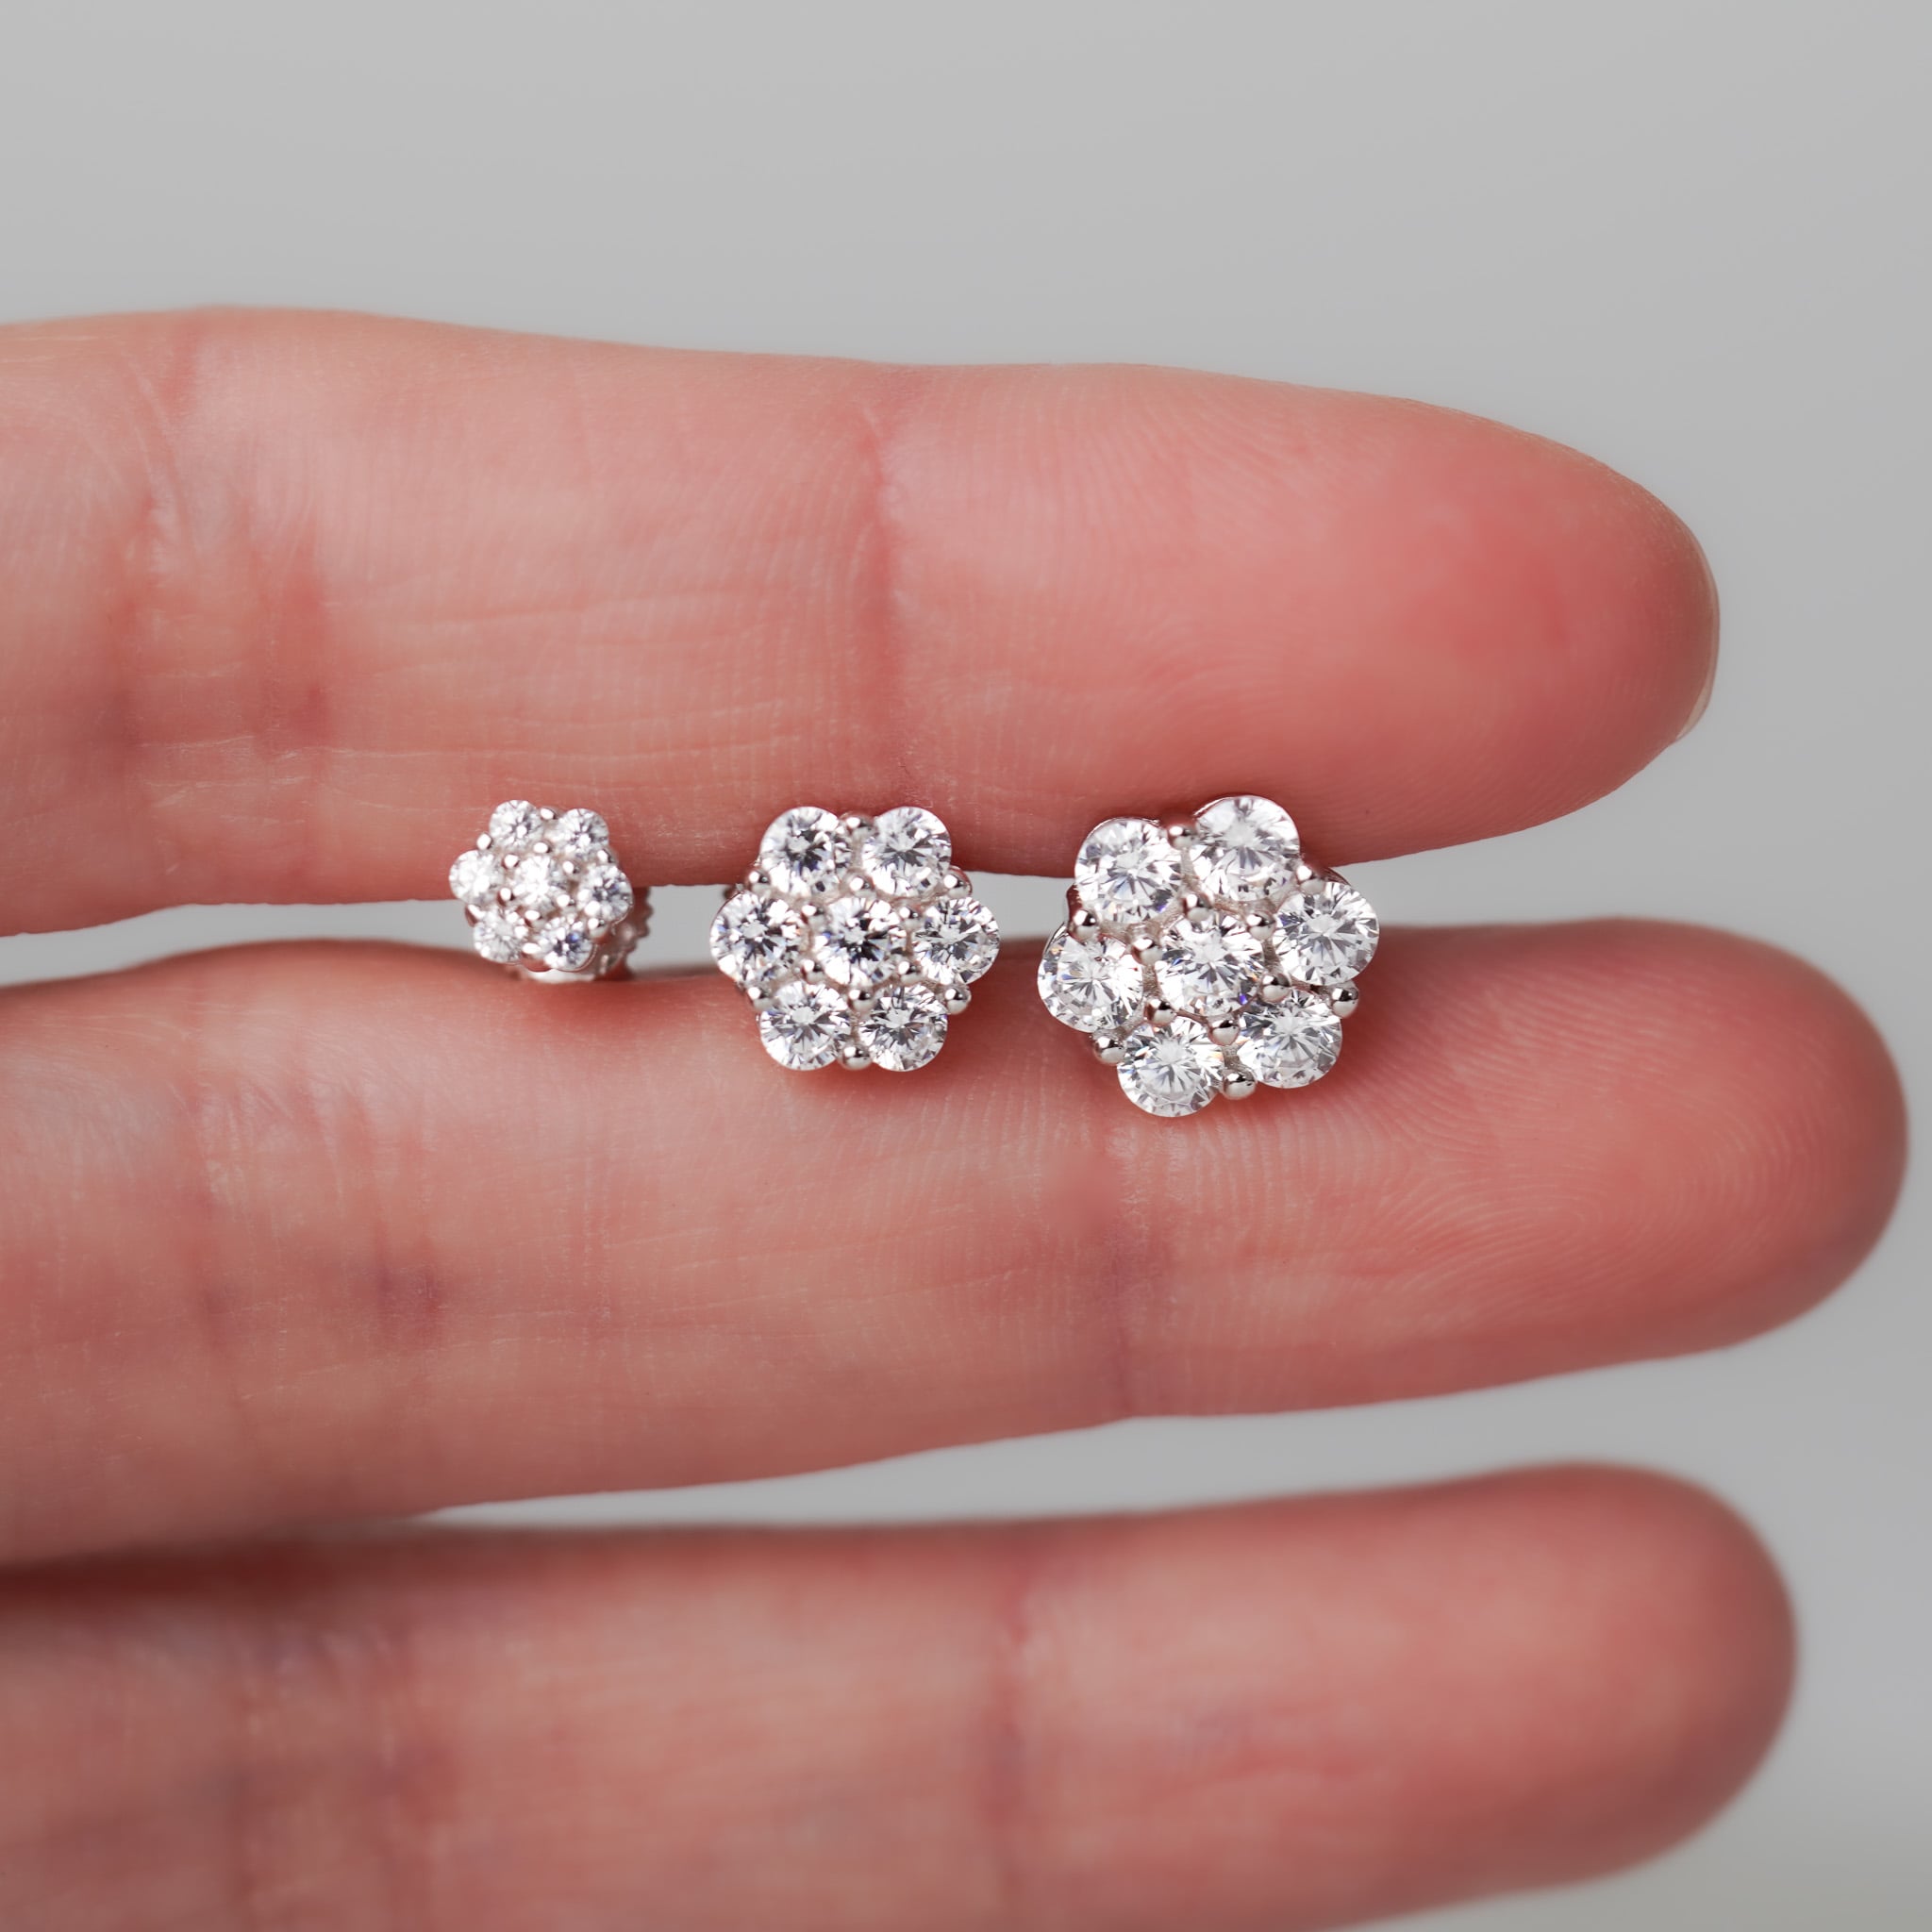 Flower Stud Earrings in Moissanite & Simulated Diamond | Screwed-Back